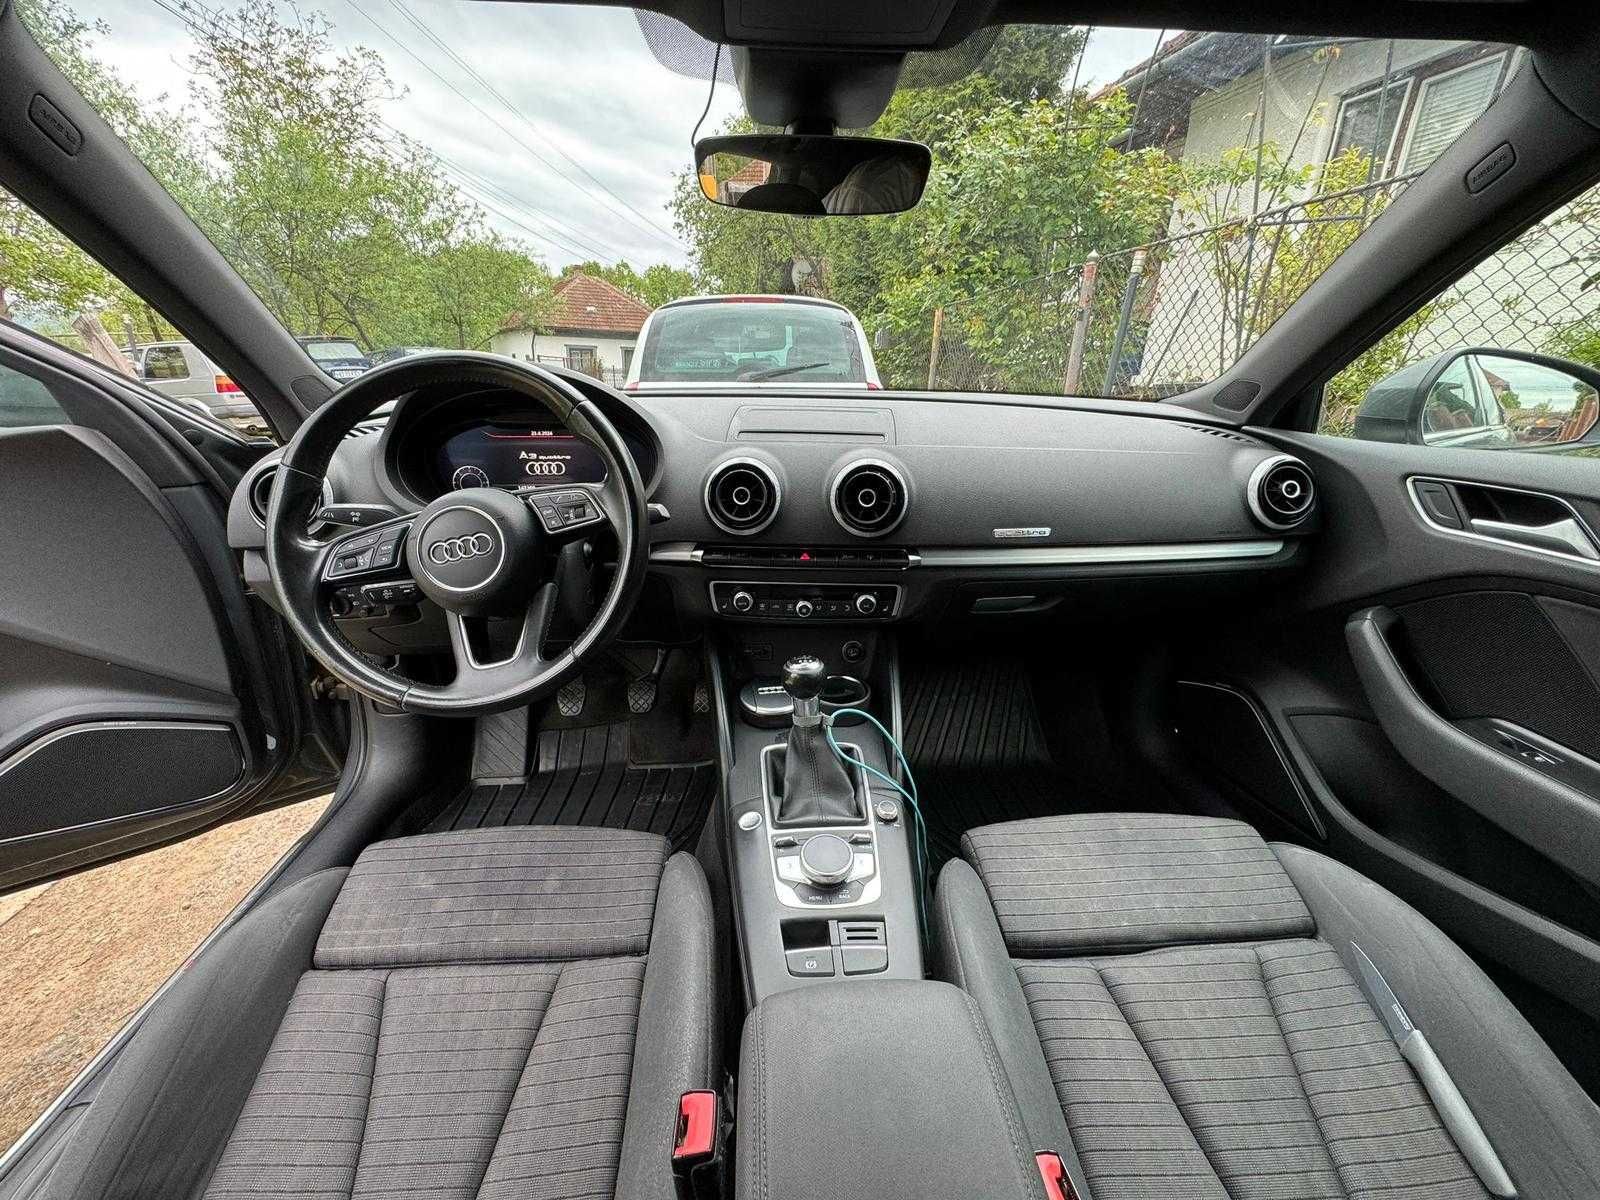 Audi A3 8V Facelift 2.0 TDI 150 CP - quattro - virtual cockpit